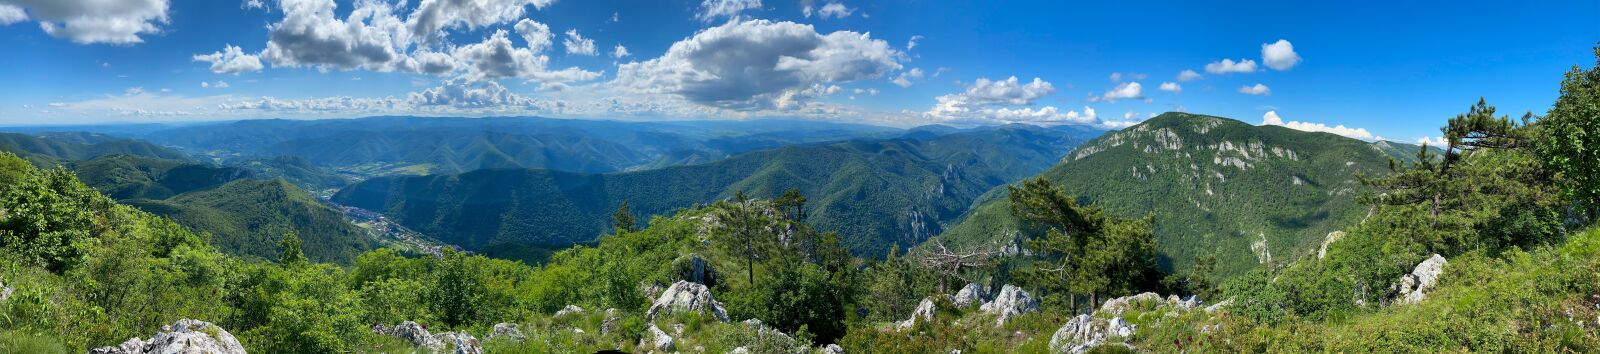 Apple iPhone 11 Pro sample photo. Mountain, mountains, landscape photography